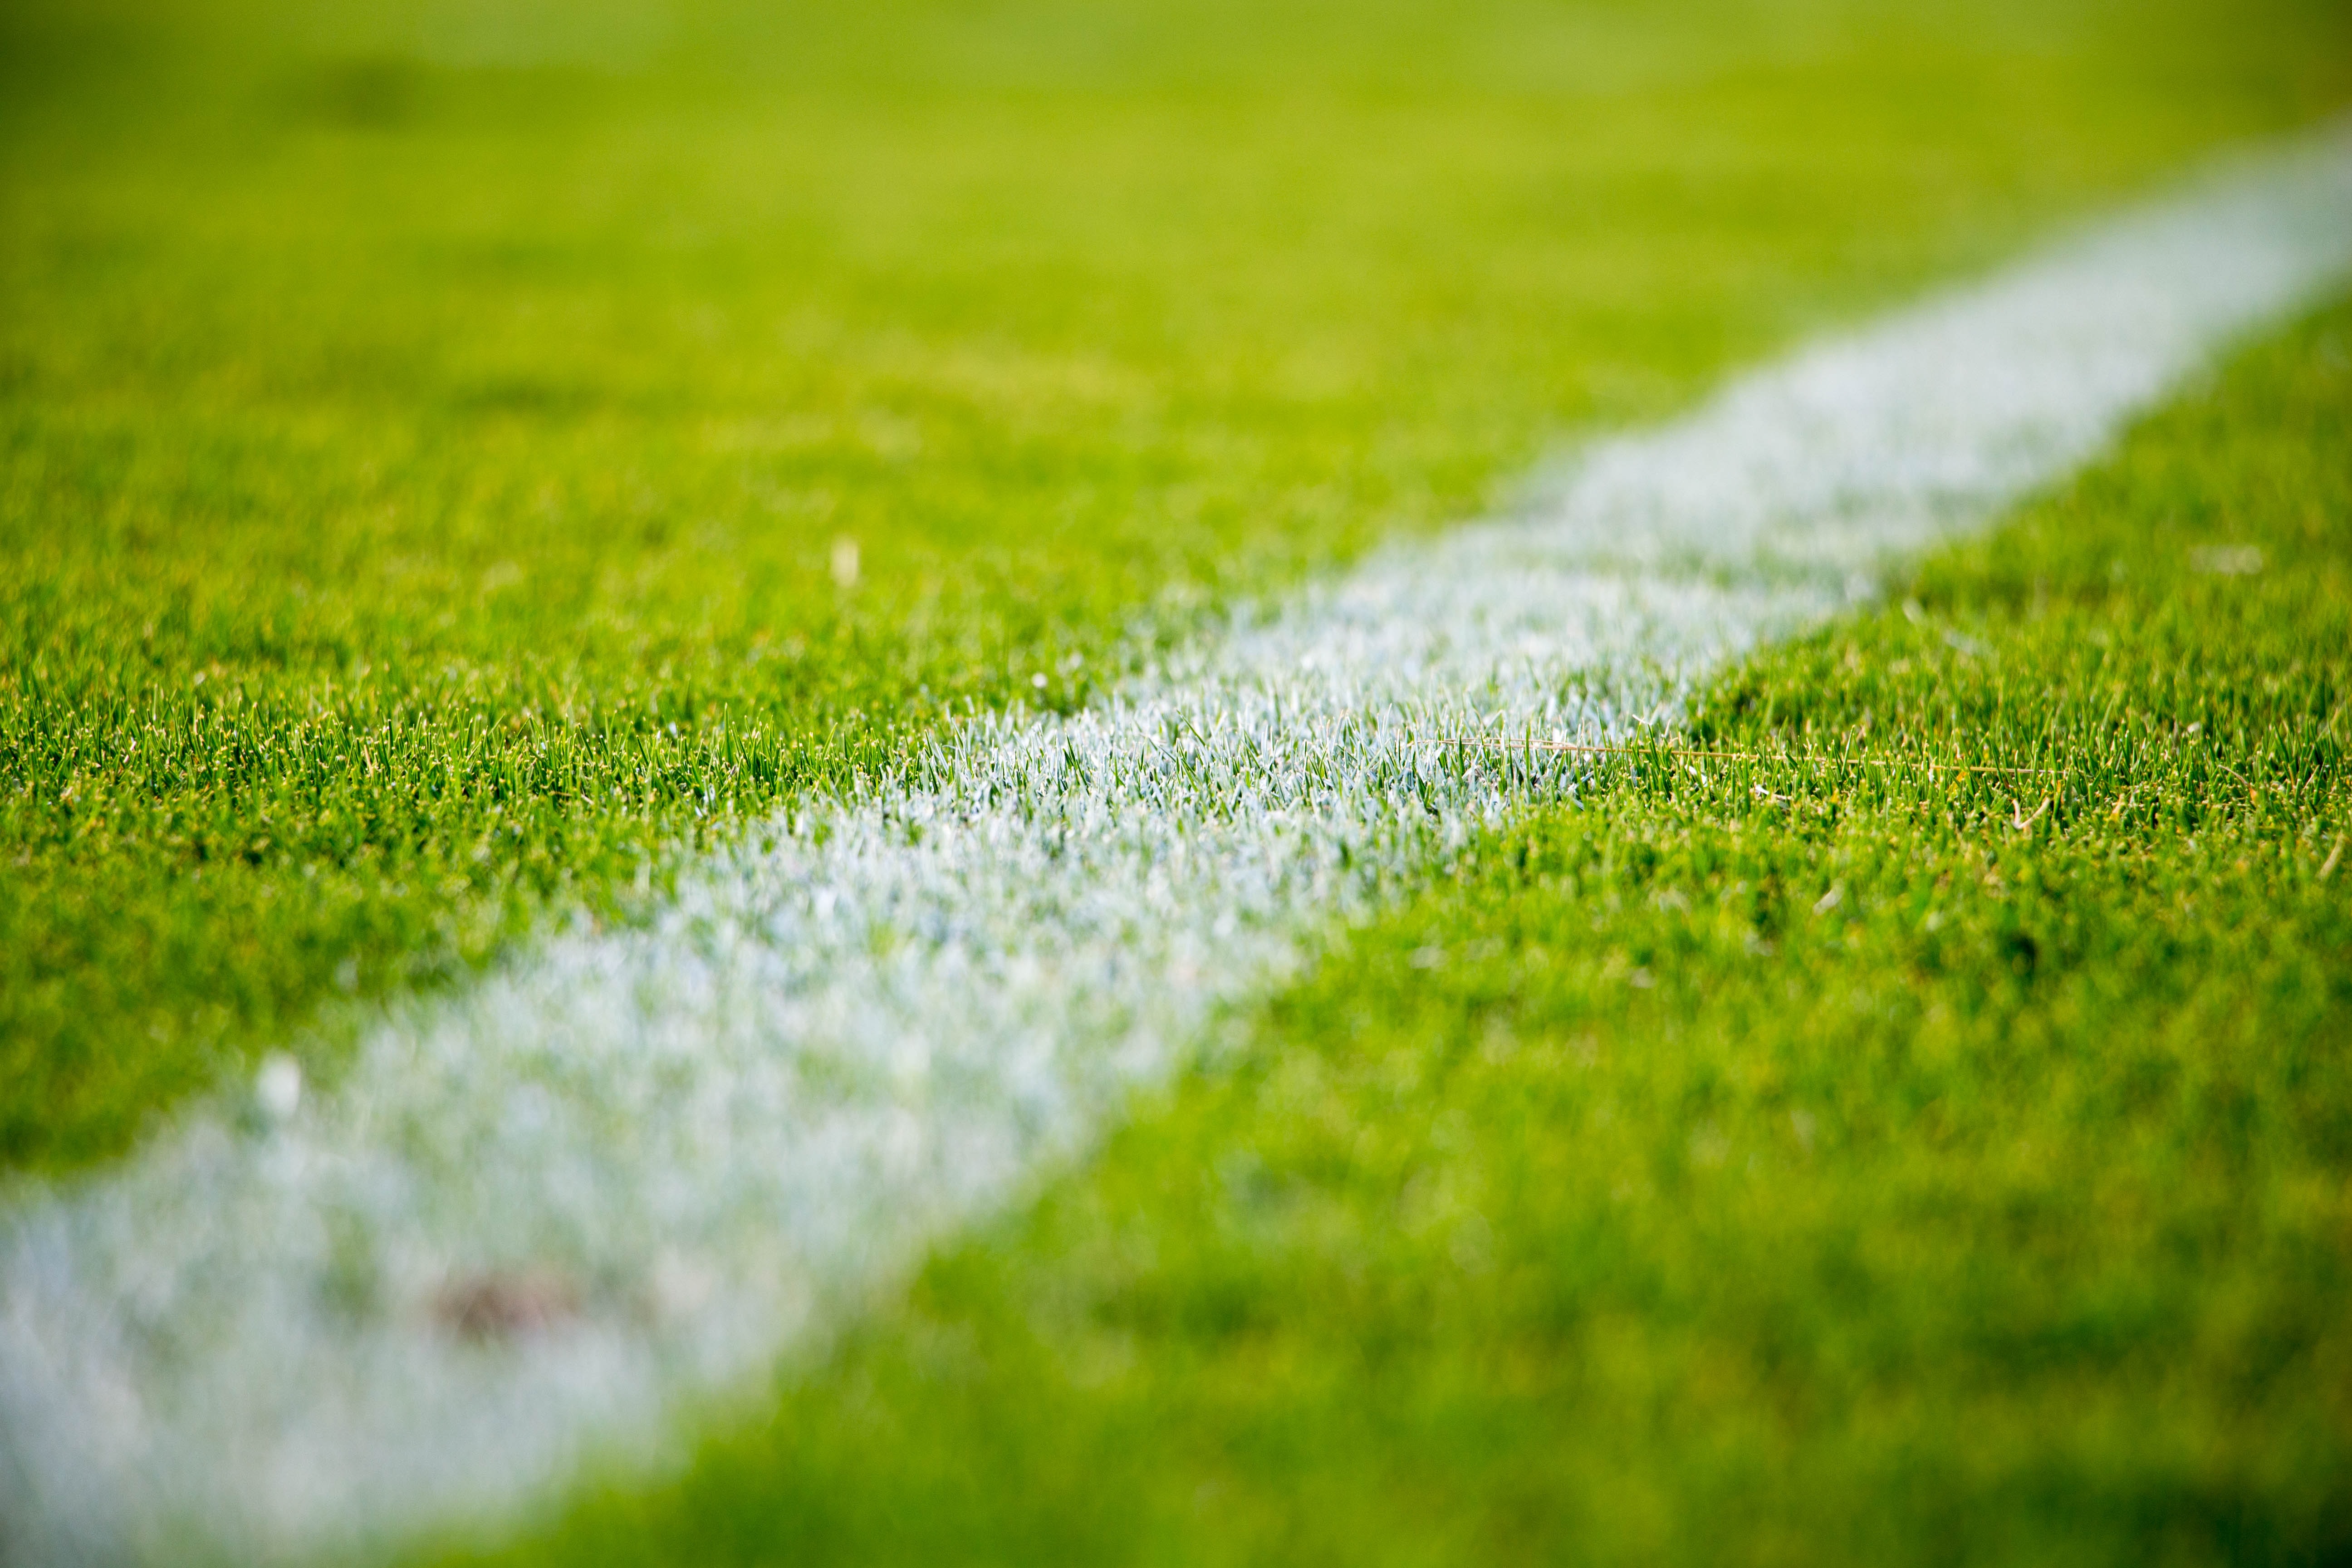 Closeup of football field